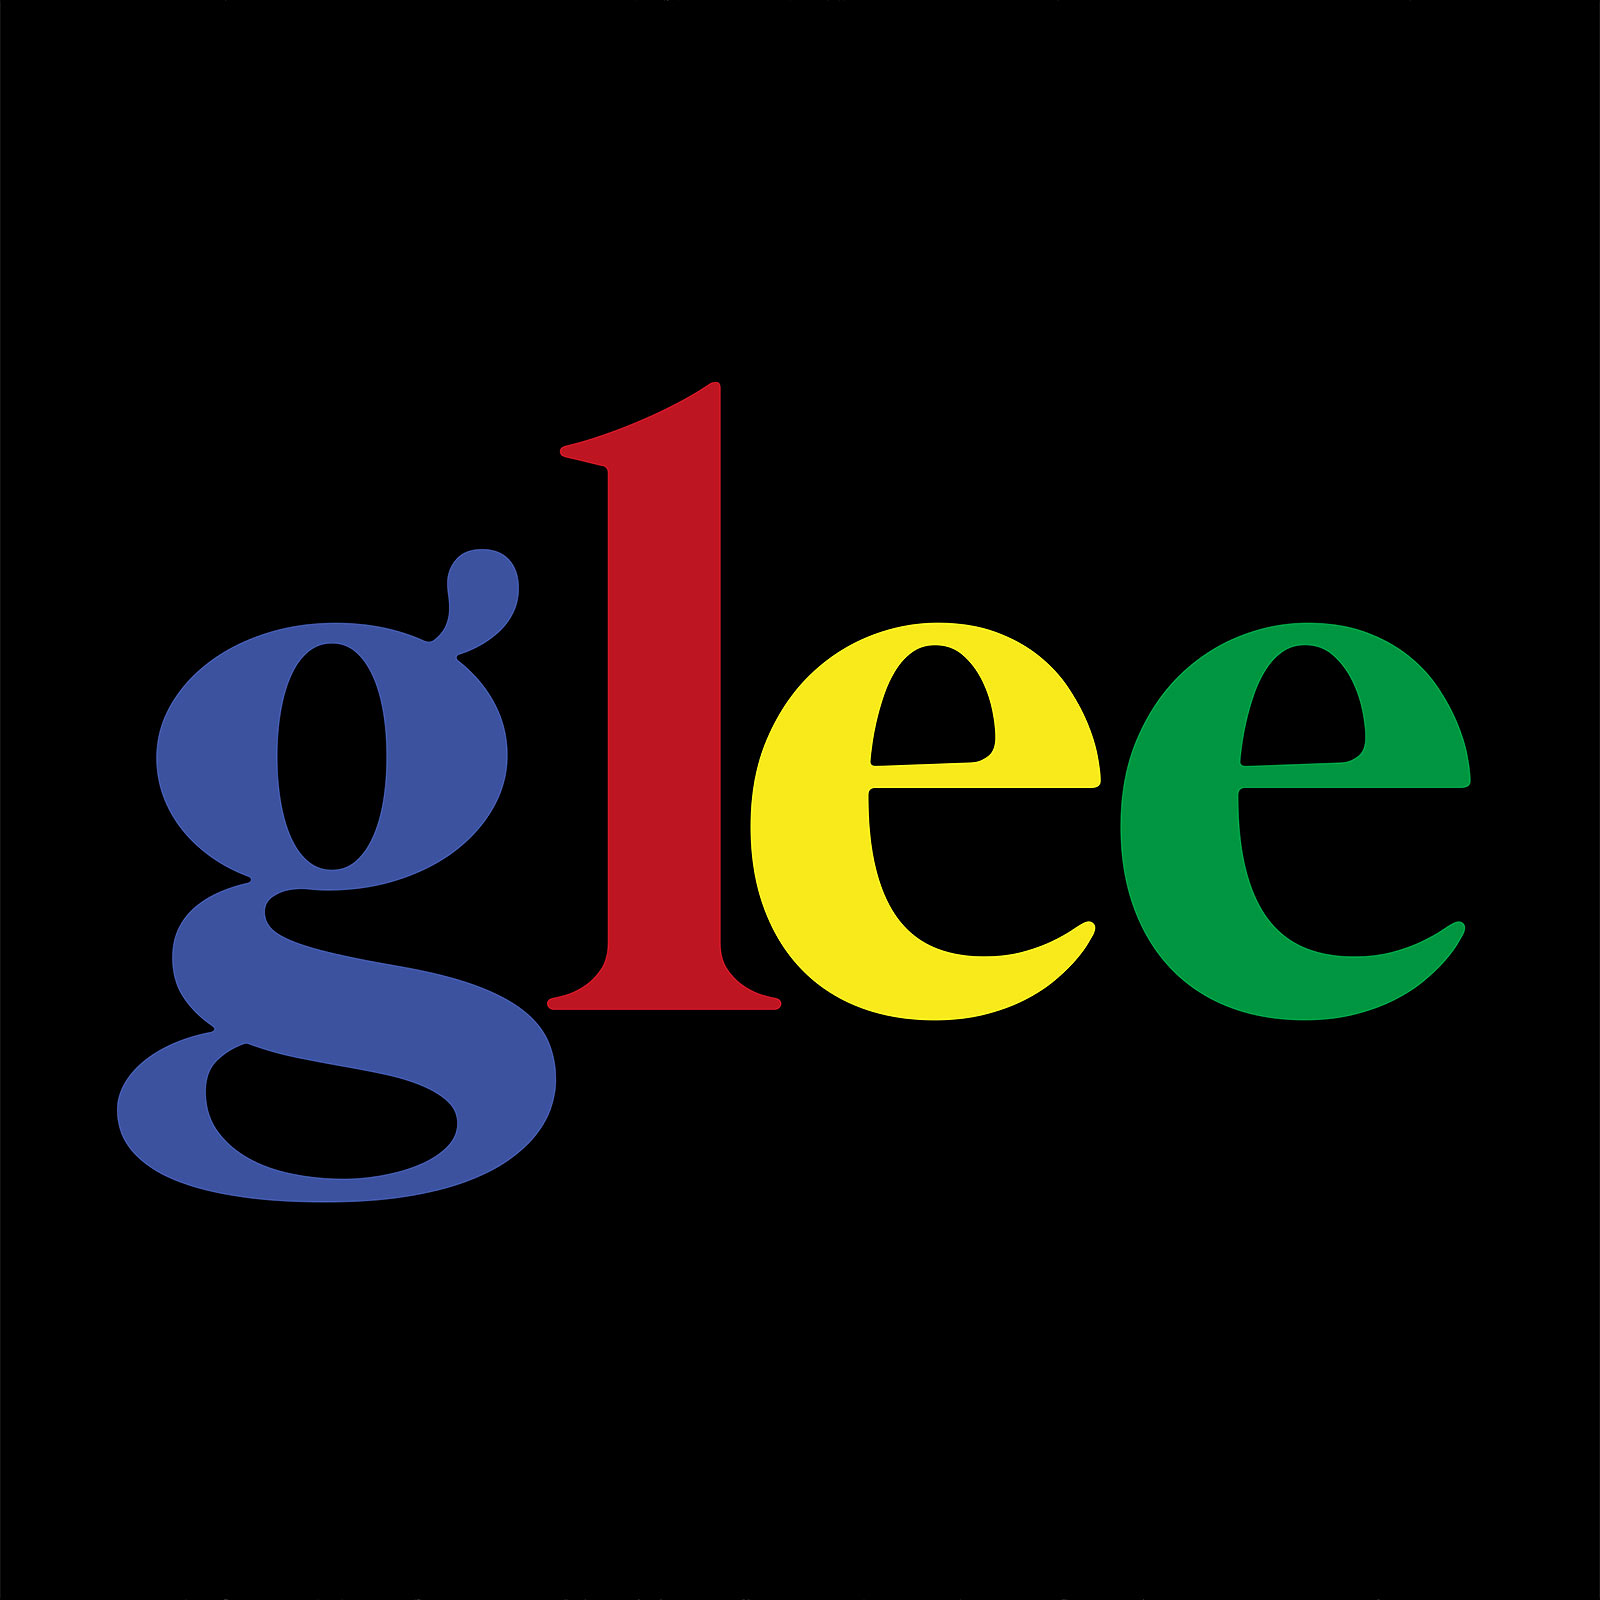 Kleurcode Logo T-shirt voor Glee Fans Zwart